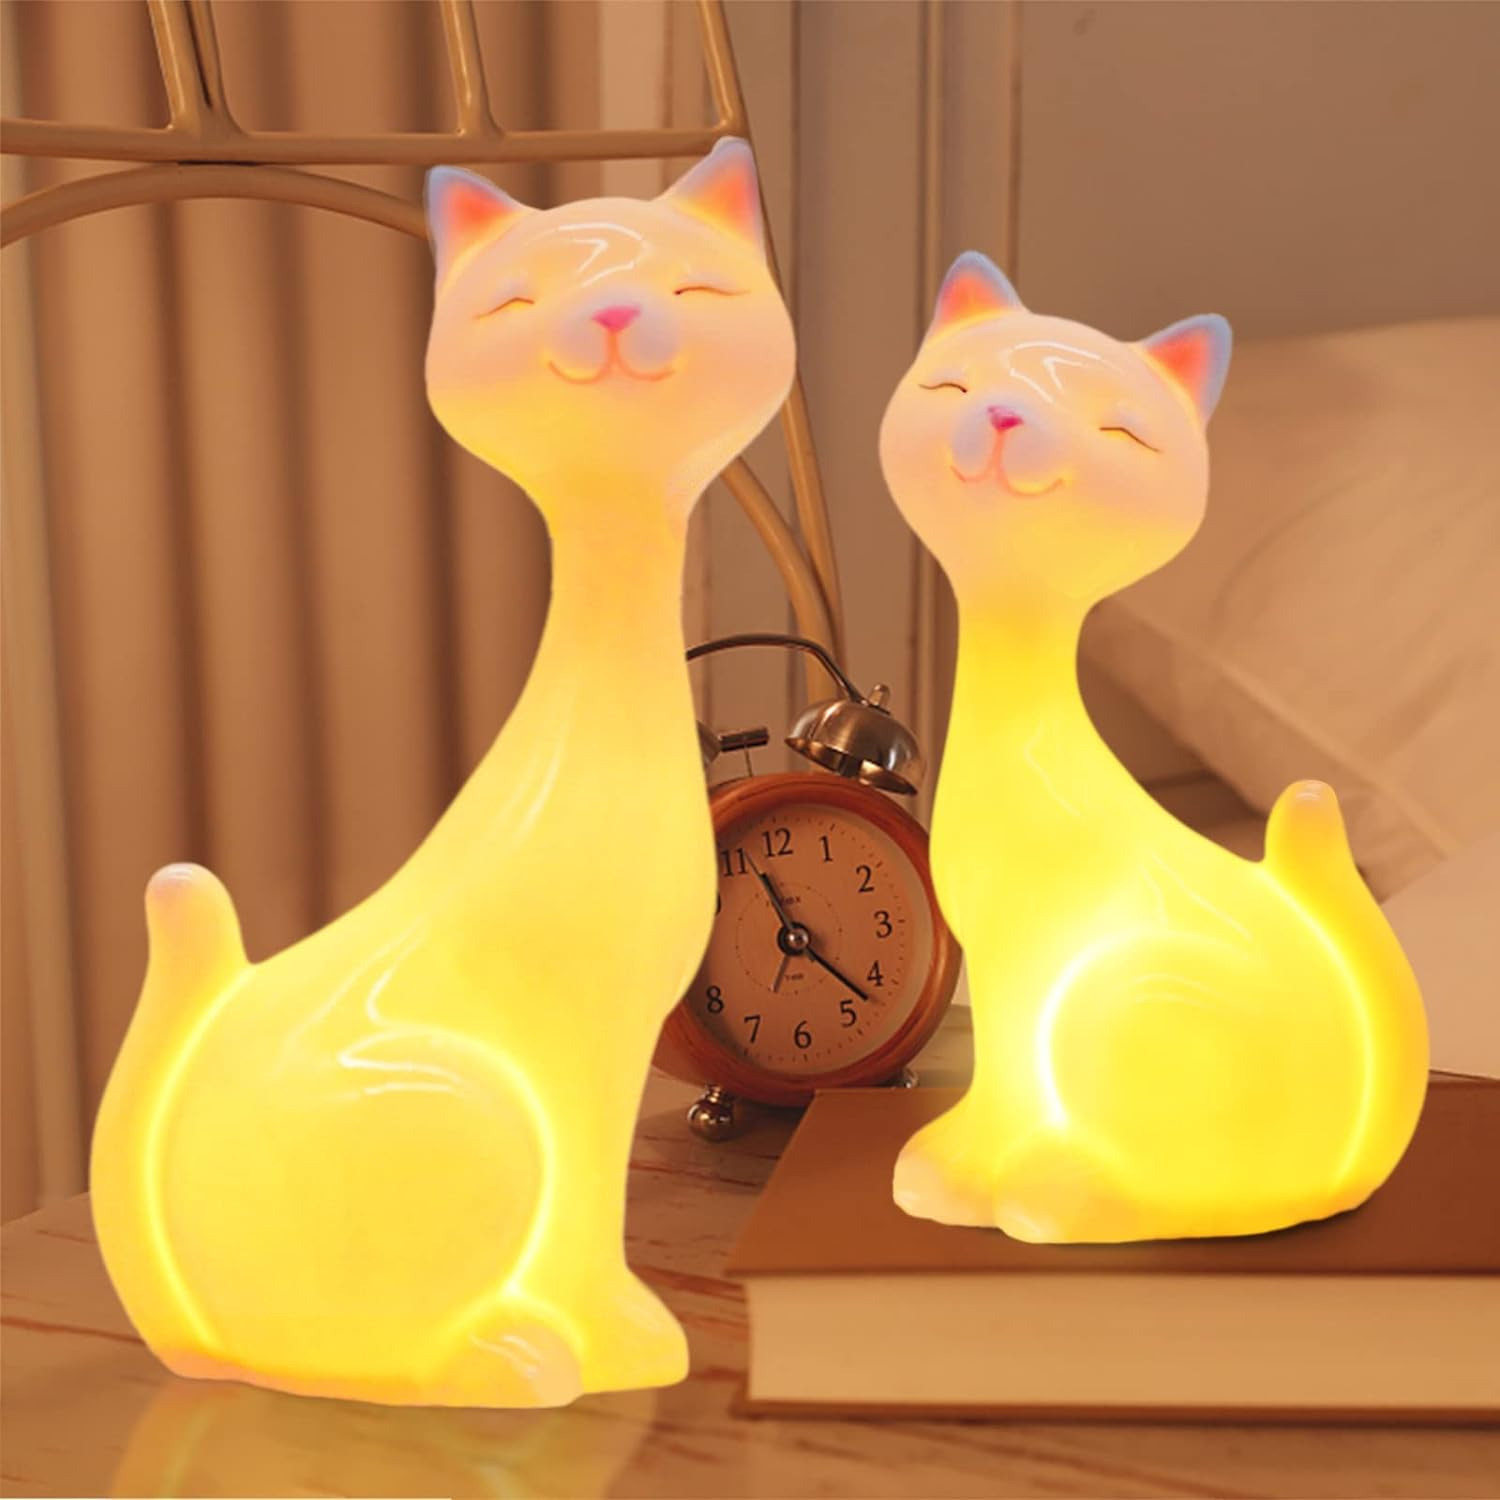 2 PCS White Ceramic Cat Figurines with LED Light, Cute Kitten Statue Home Decor,